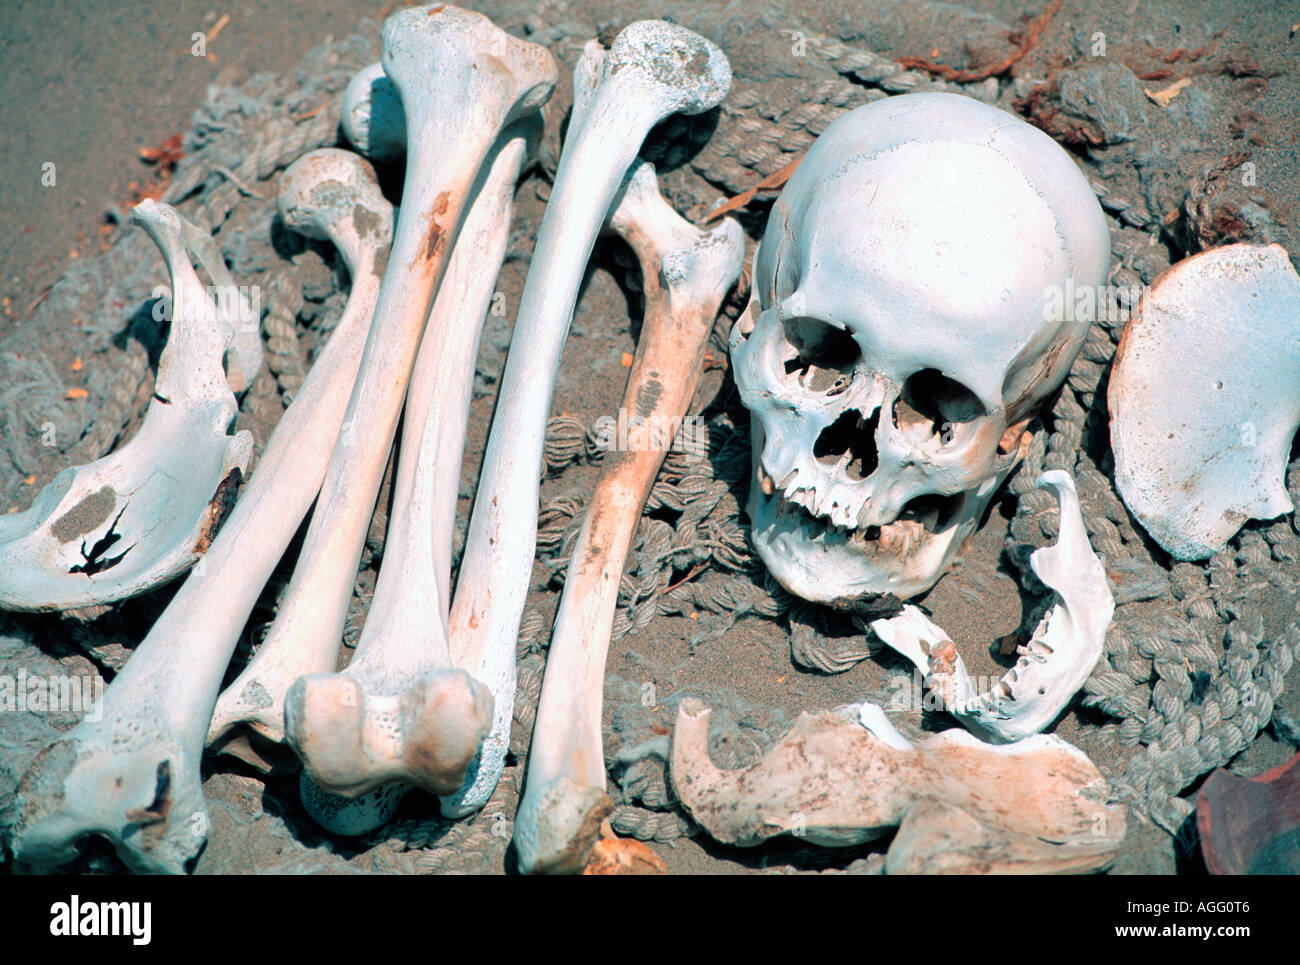 acient human remains/skeleton in grave, Chauchilla cemetary, Nazca, Peru Stock Photo